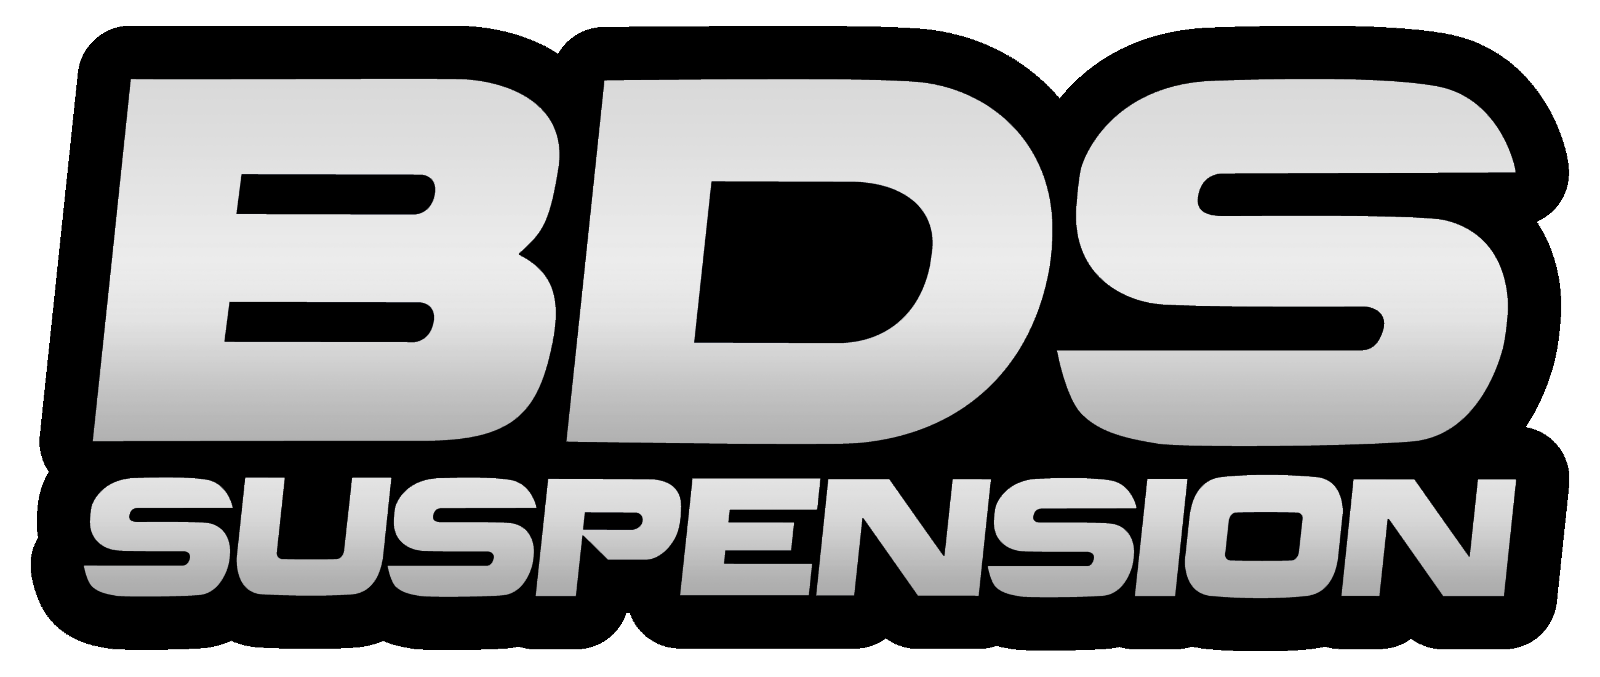 BDS BDS179FS 6 Inch Lift Kit - Chevy Silverado or GMC Sierra 1500 (99-06) 4WD